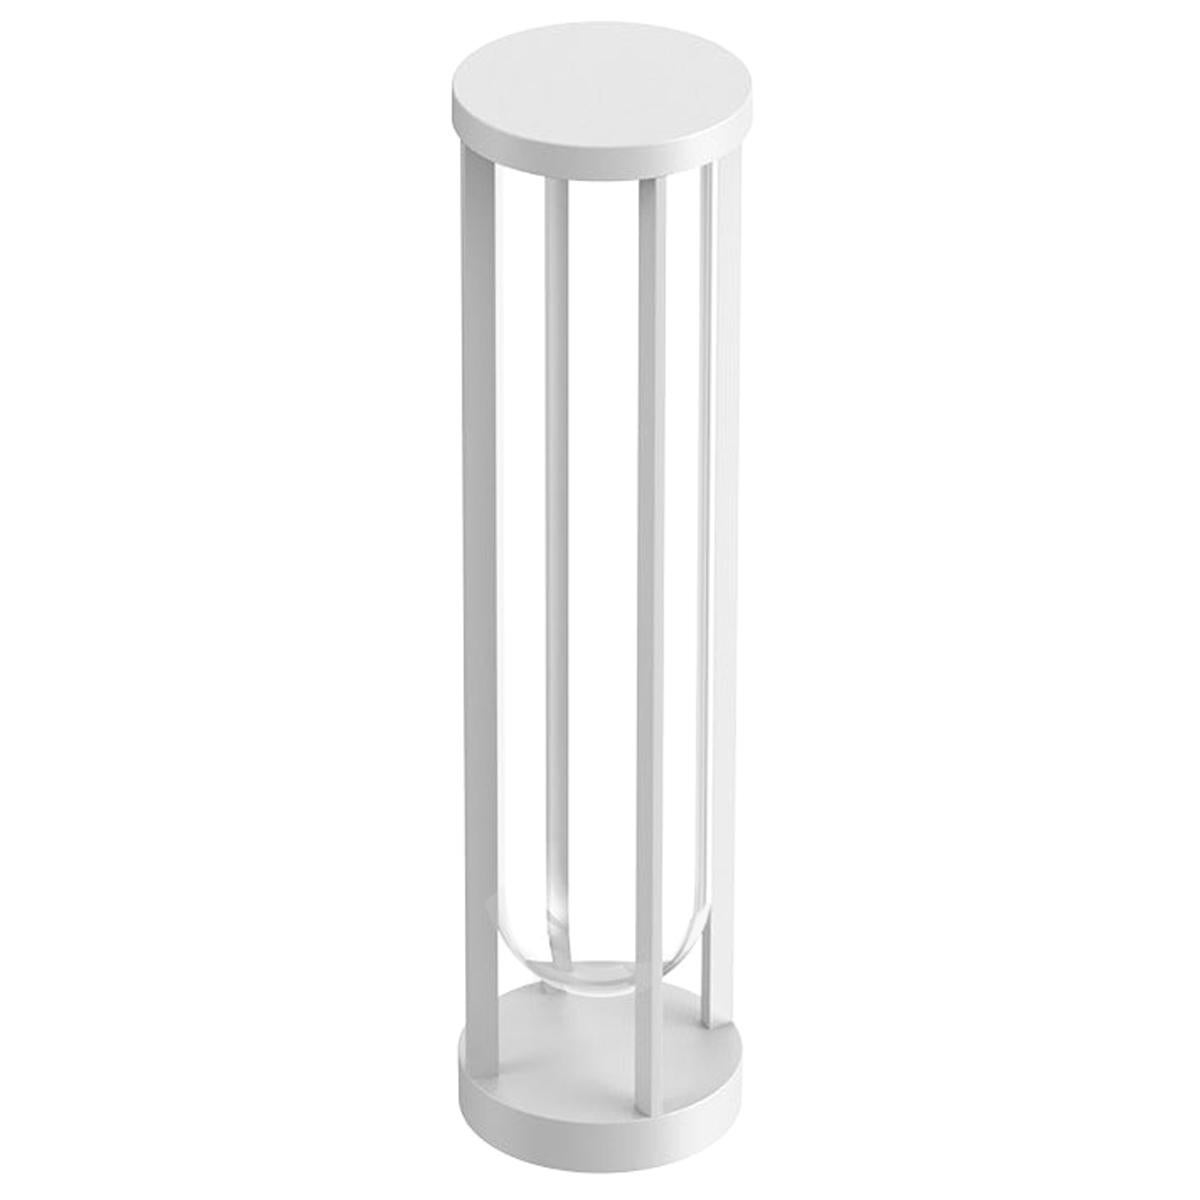 Flos In Vitro Bollard 2 0-10V 2700K Floor Lamp in White by Philippe Starck For Sale